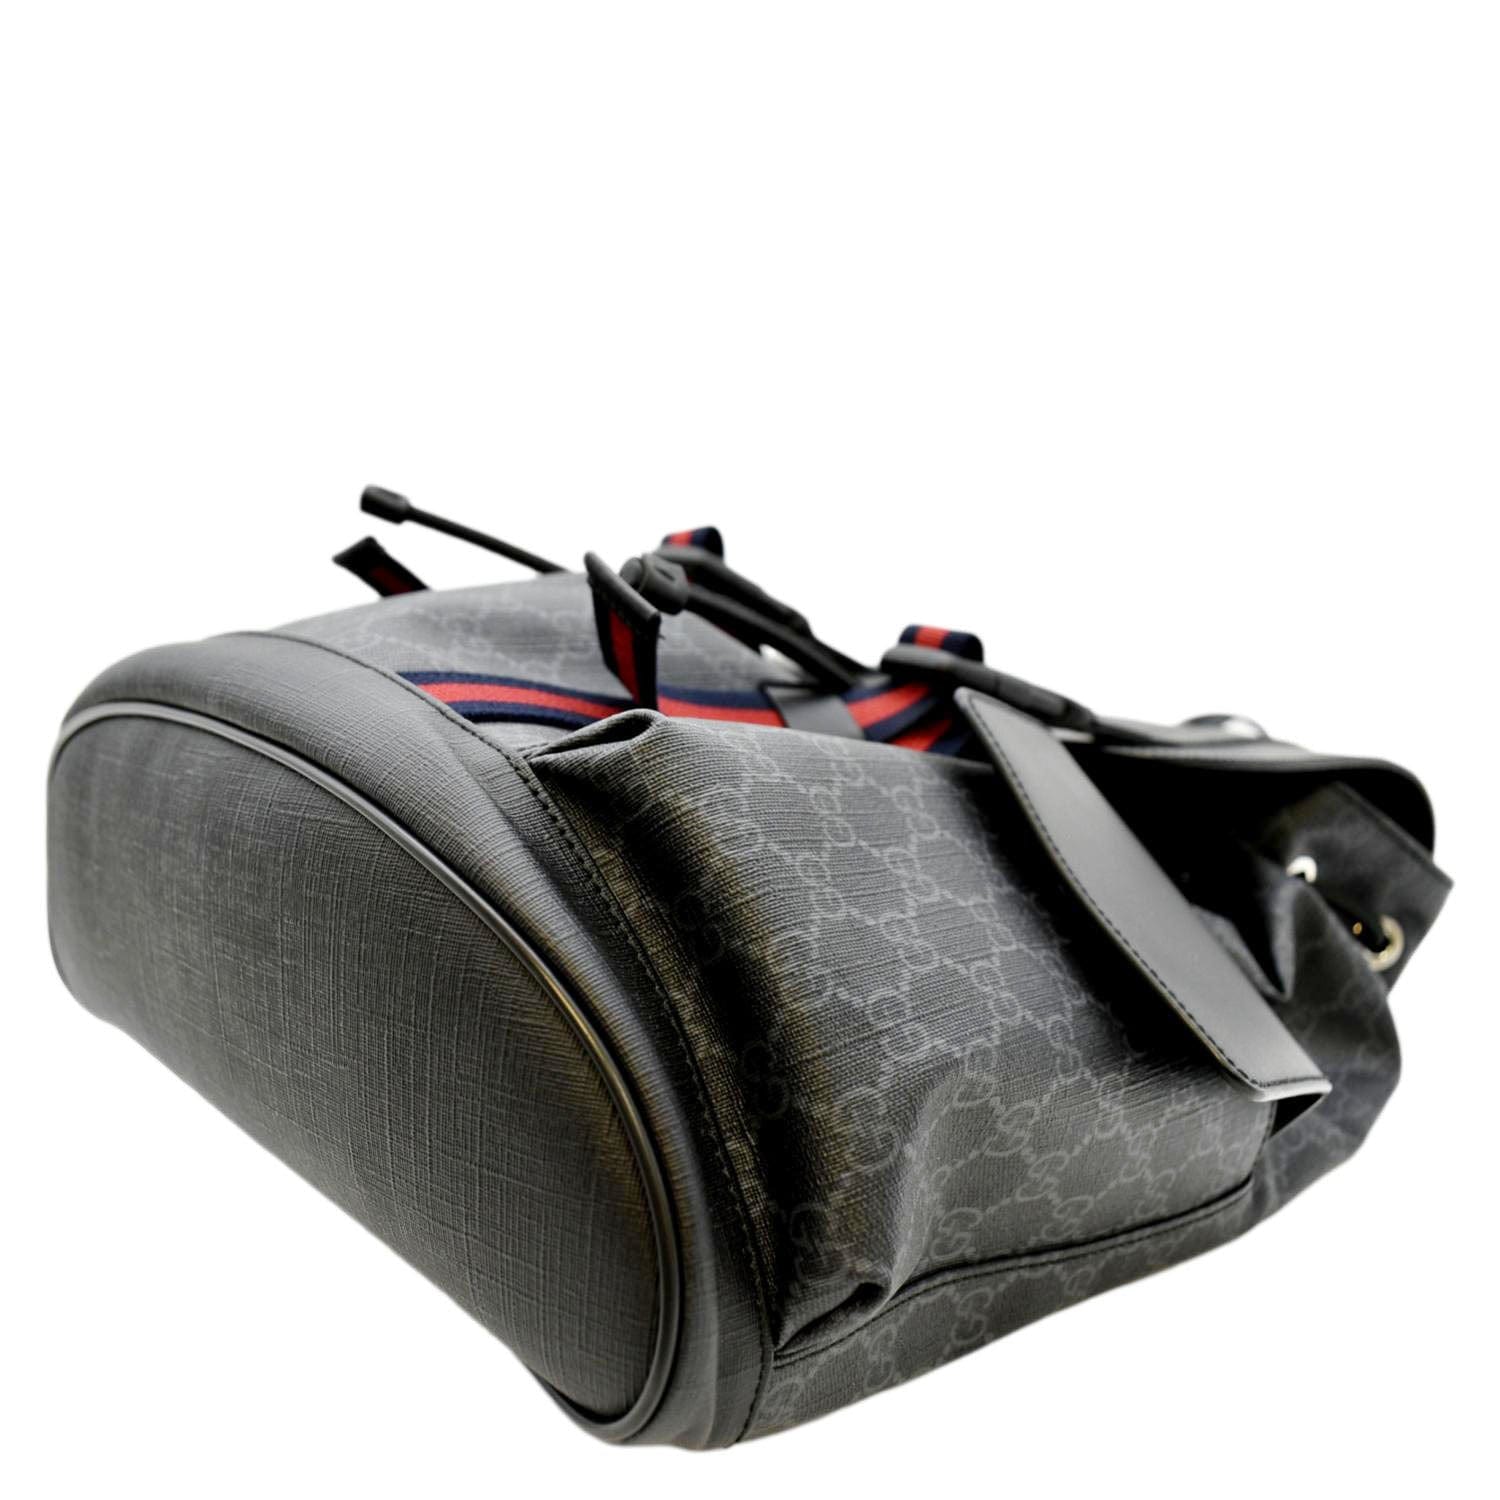 Jumbo GG backpack in black GG canvas